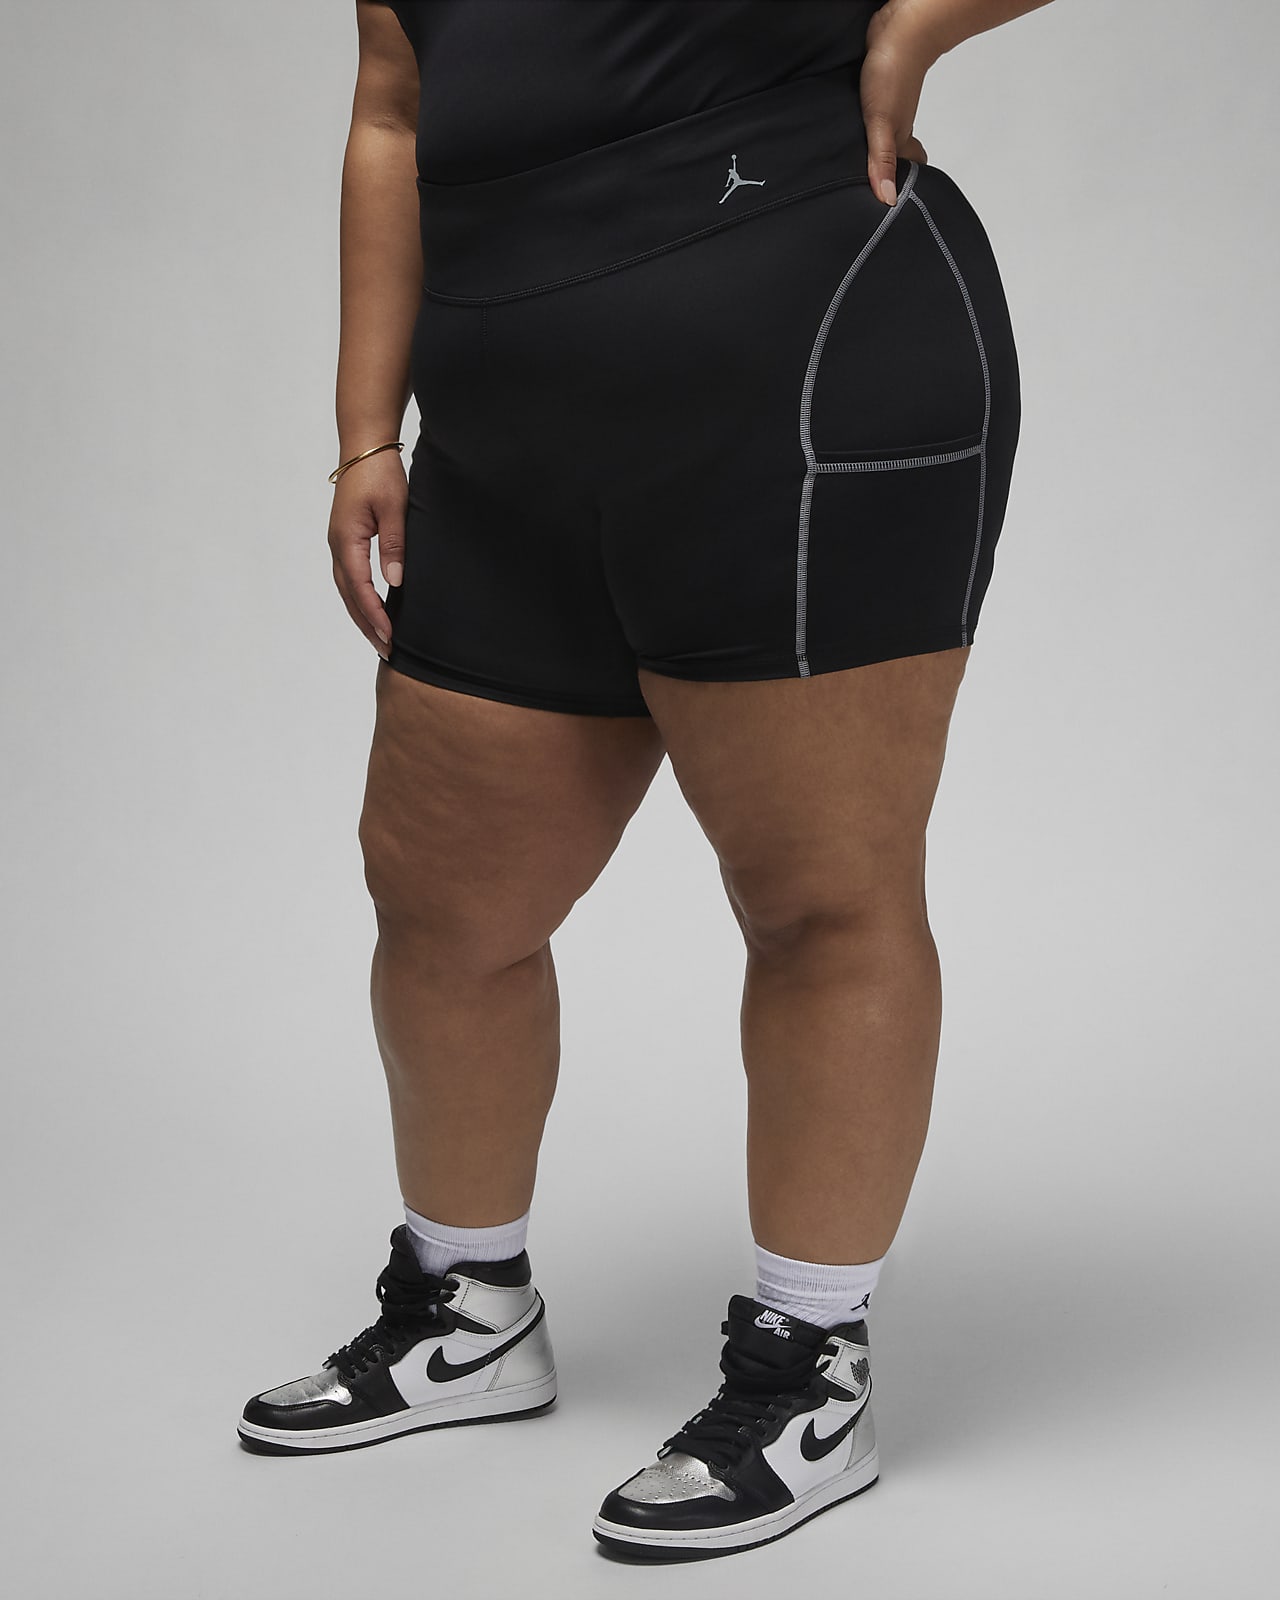 Jordan Sport Women's Shorts (Plus Size)